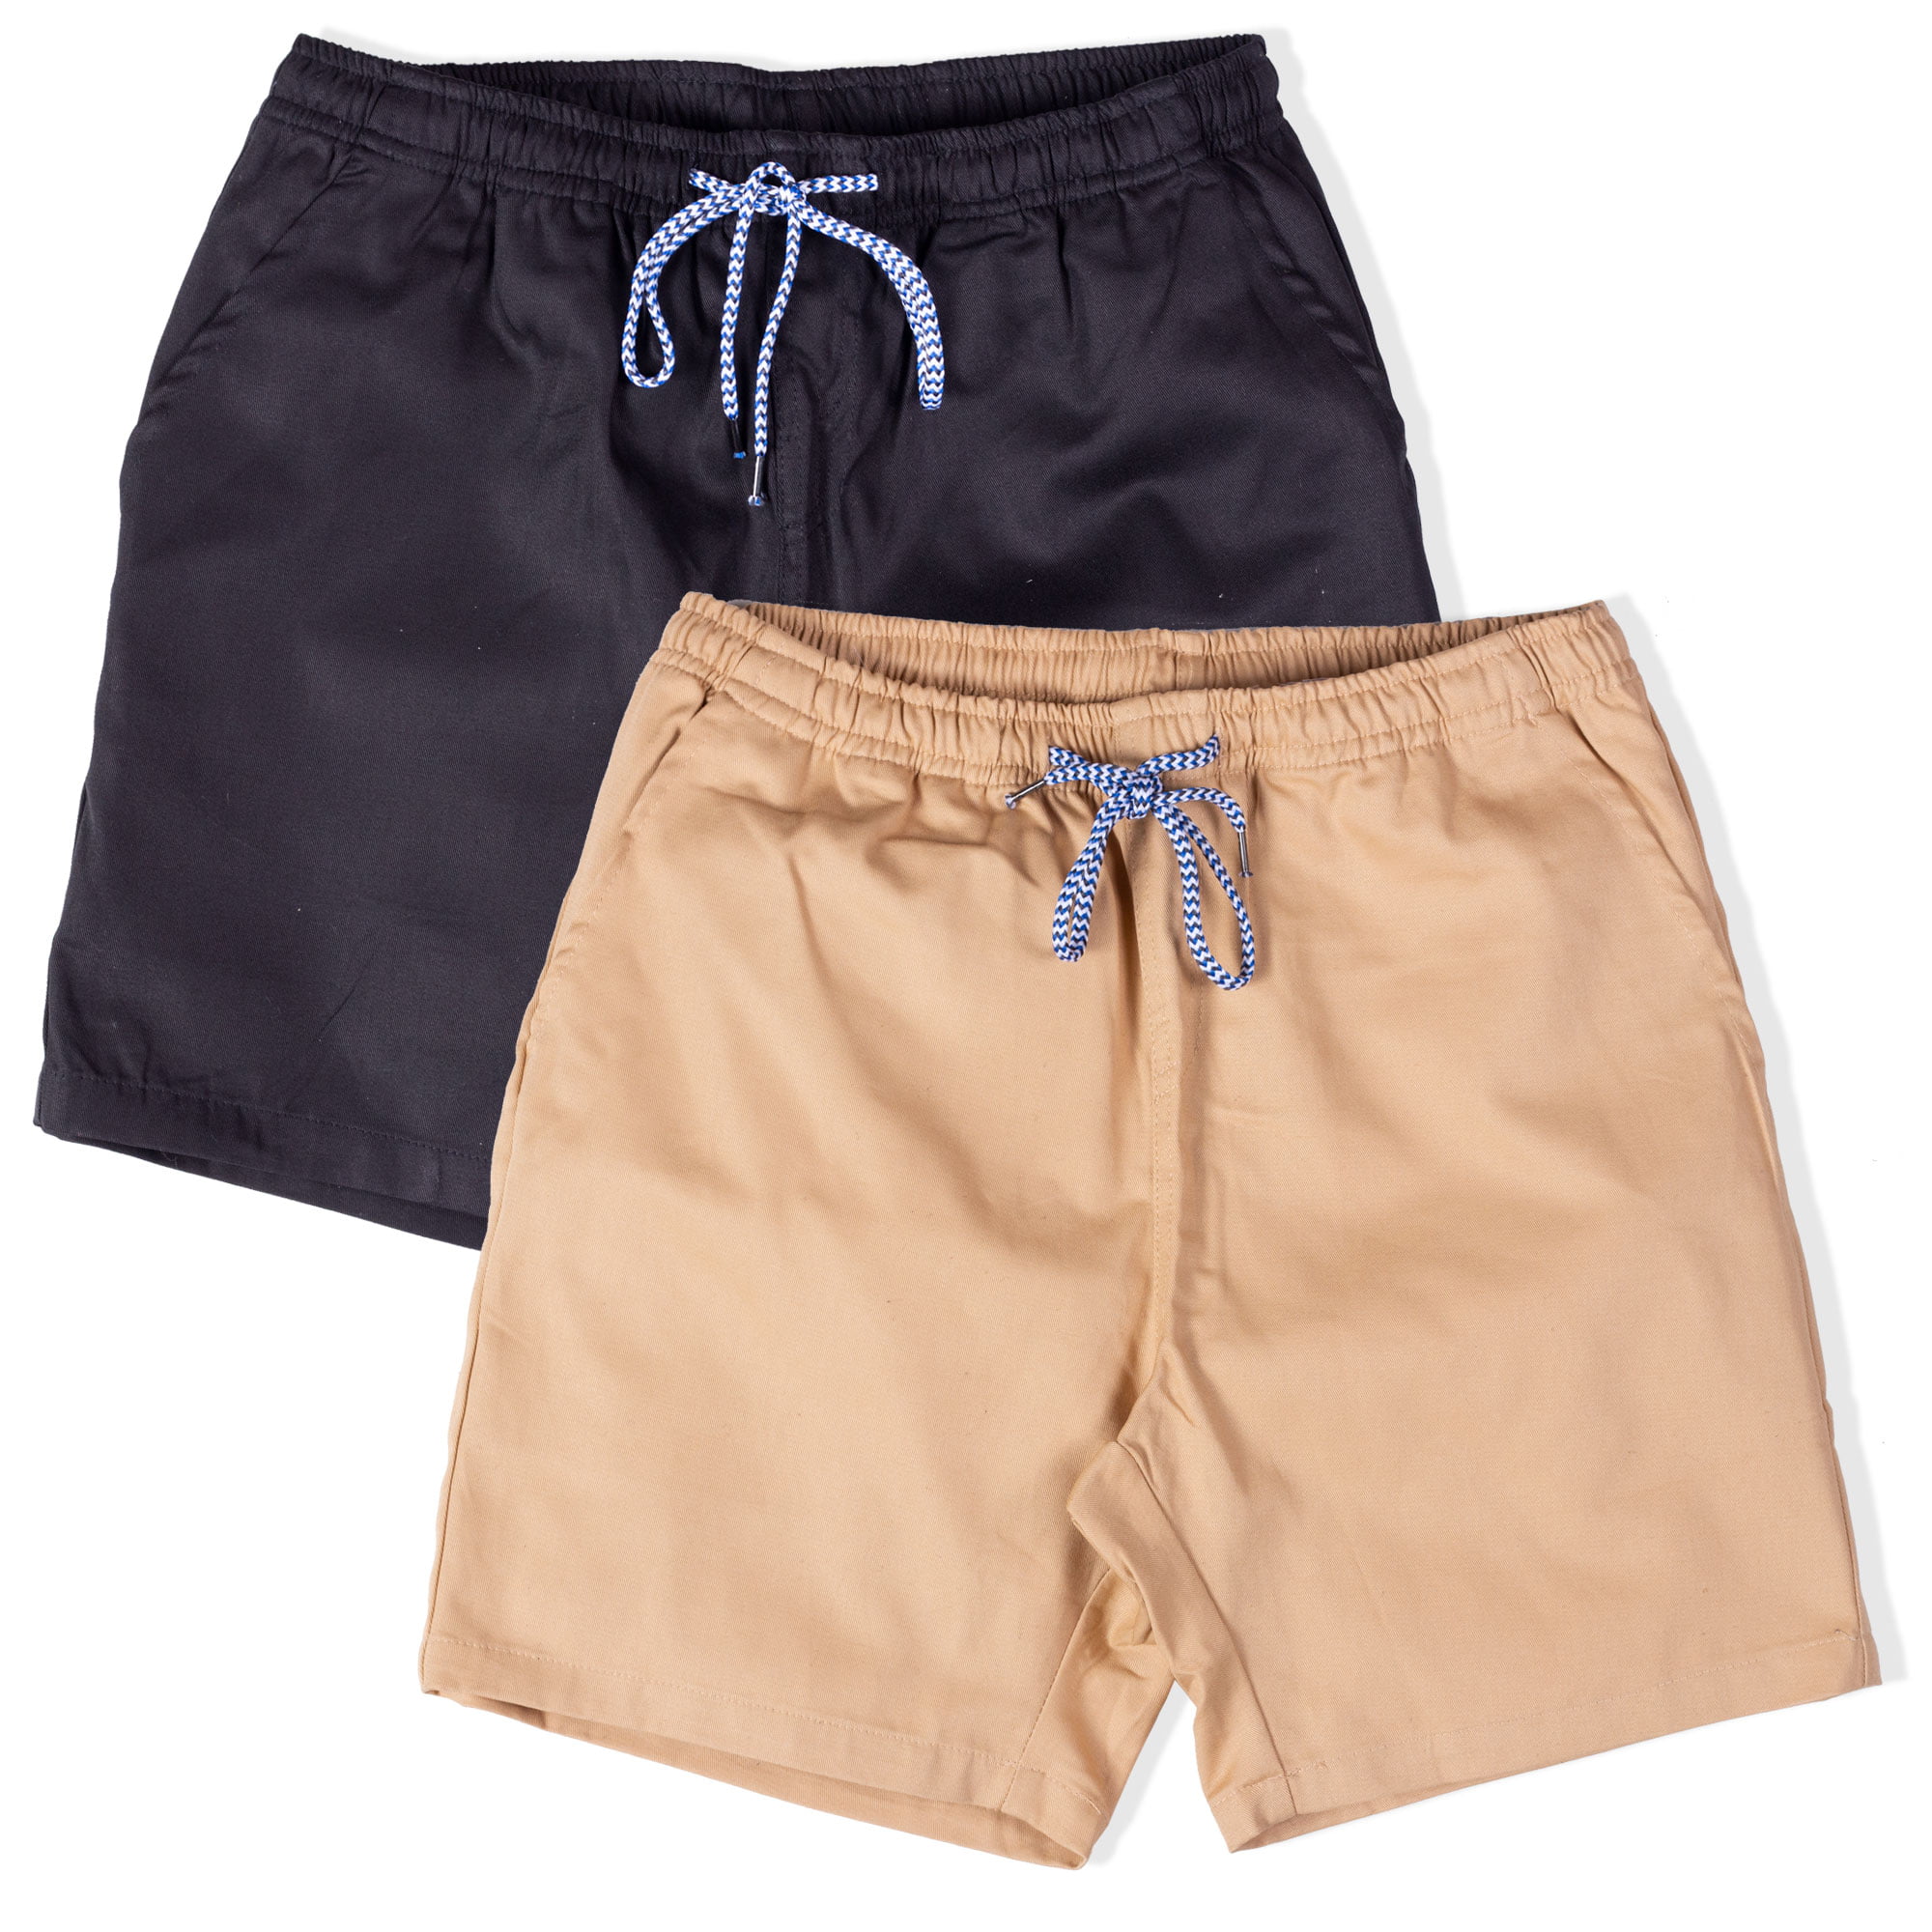 Plaid Shorts Boys Cotton Blend Pockets Elastic Waist w/ Drawstring Shorts 